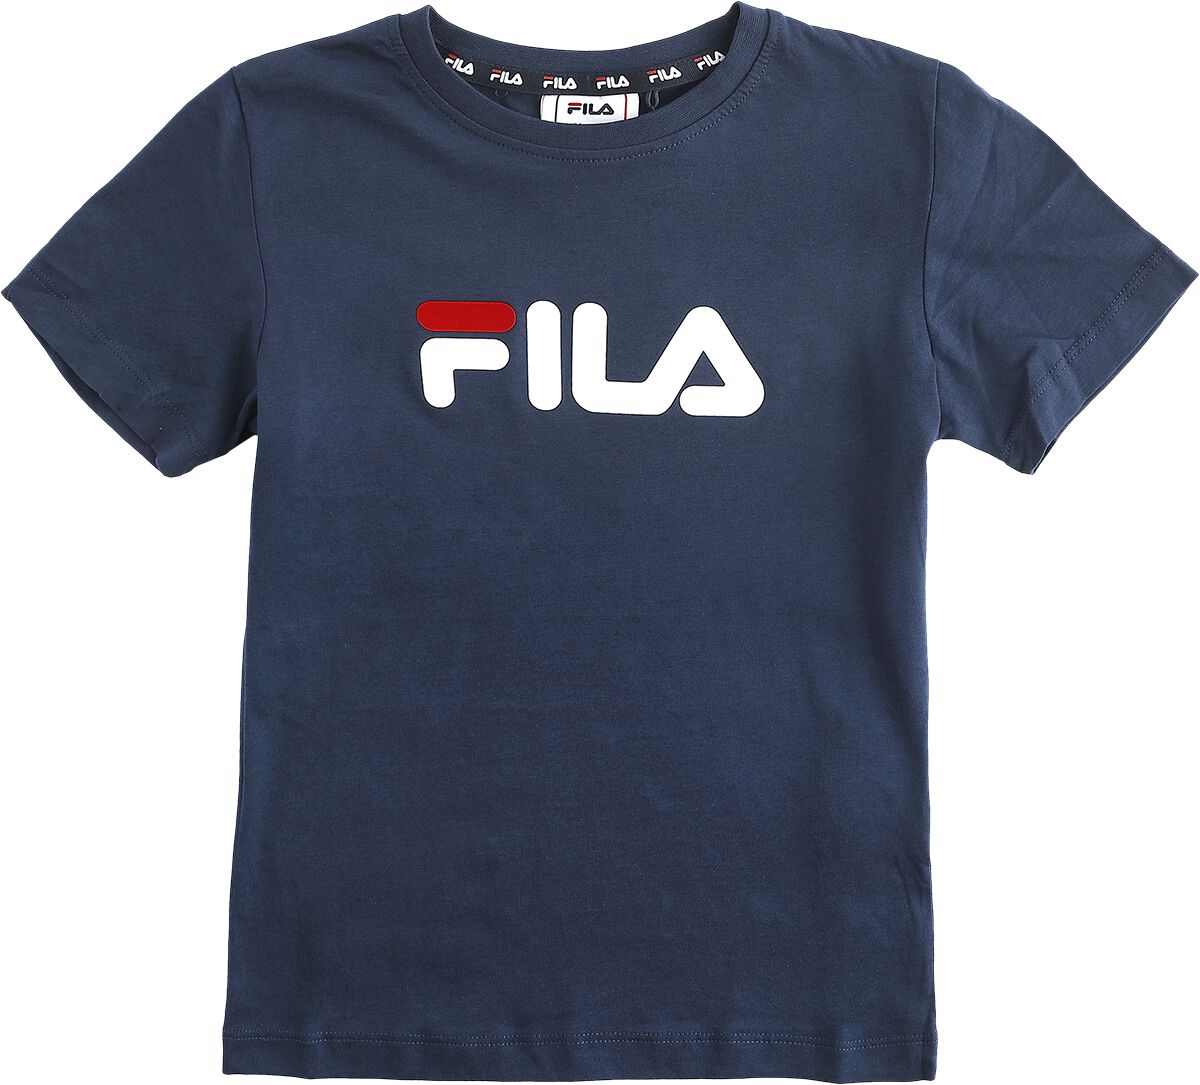 T-shirt de Fila - Solberg Classic Logo Tee - 134/140 à 170/176 - pour filles & garçonse - bleu foncé